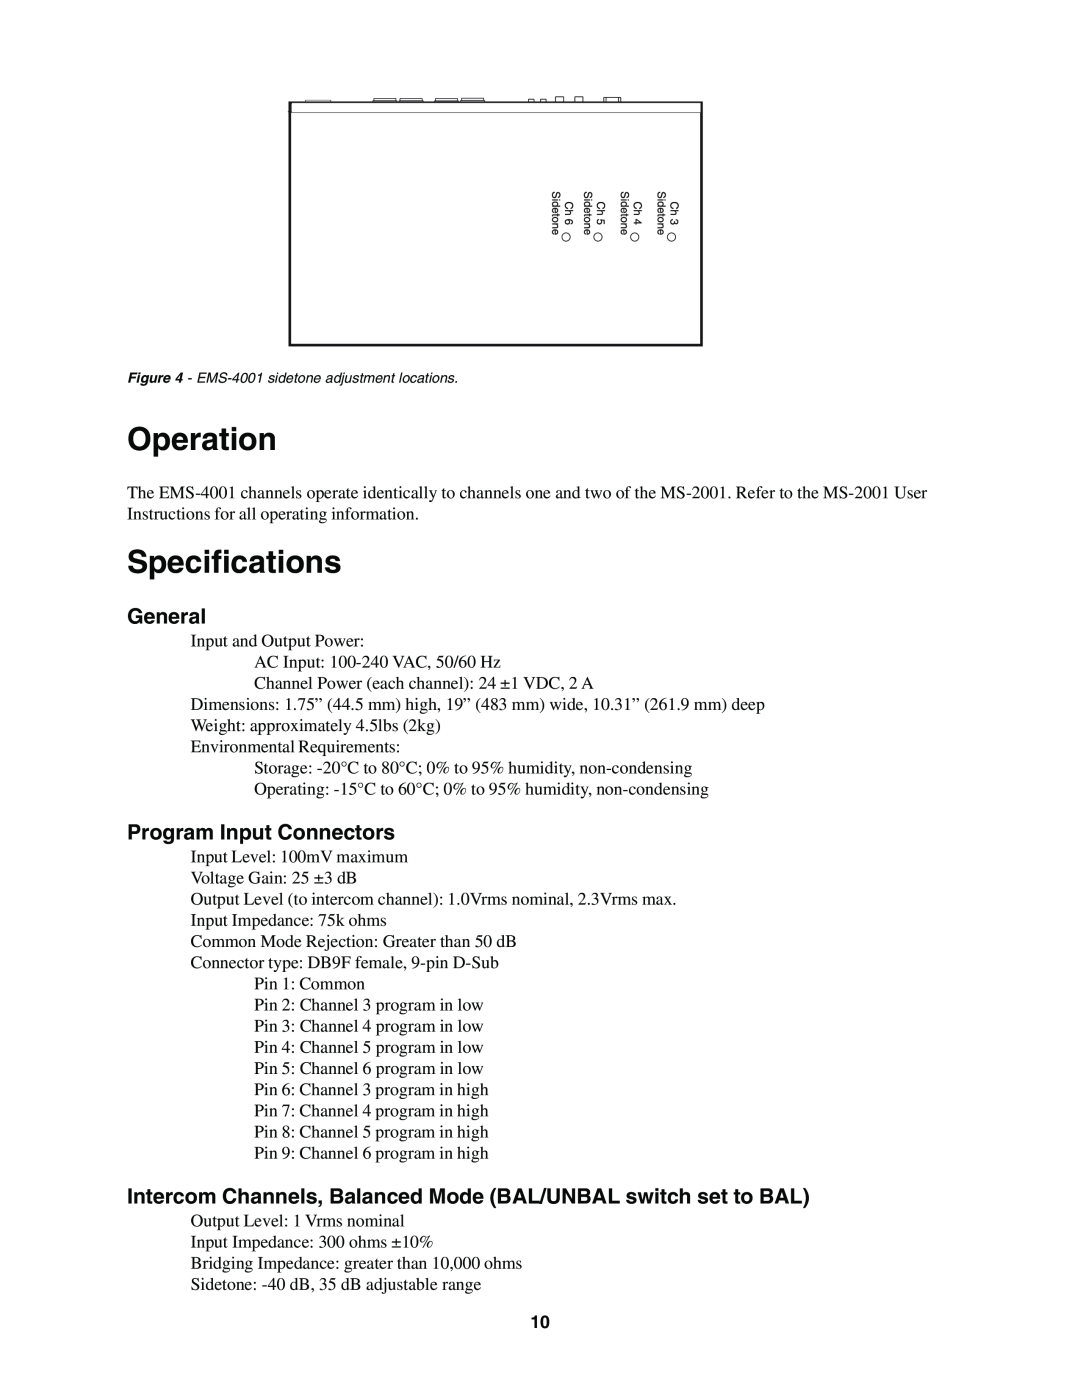 Telex EMS-4001 manual Operation, Specifications, General, Program Input Connectors 